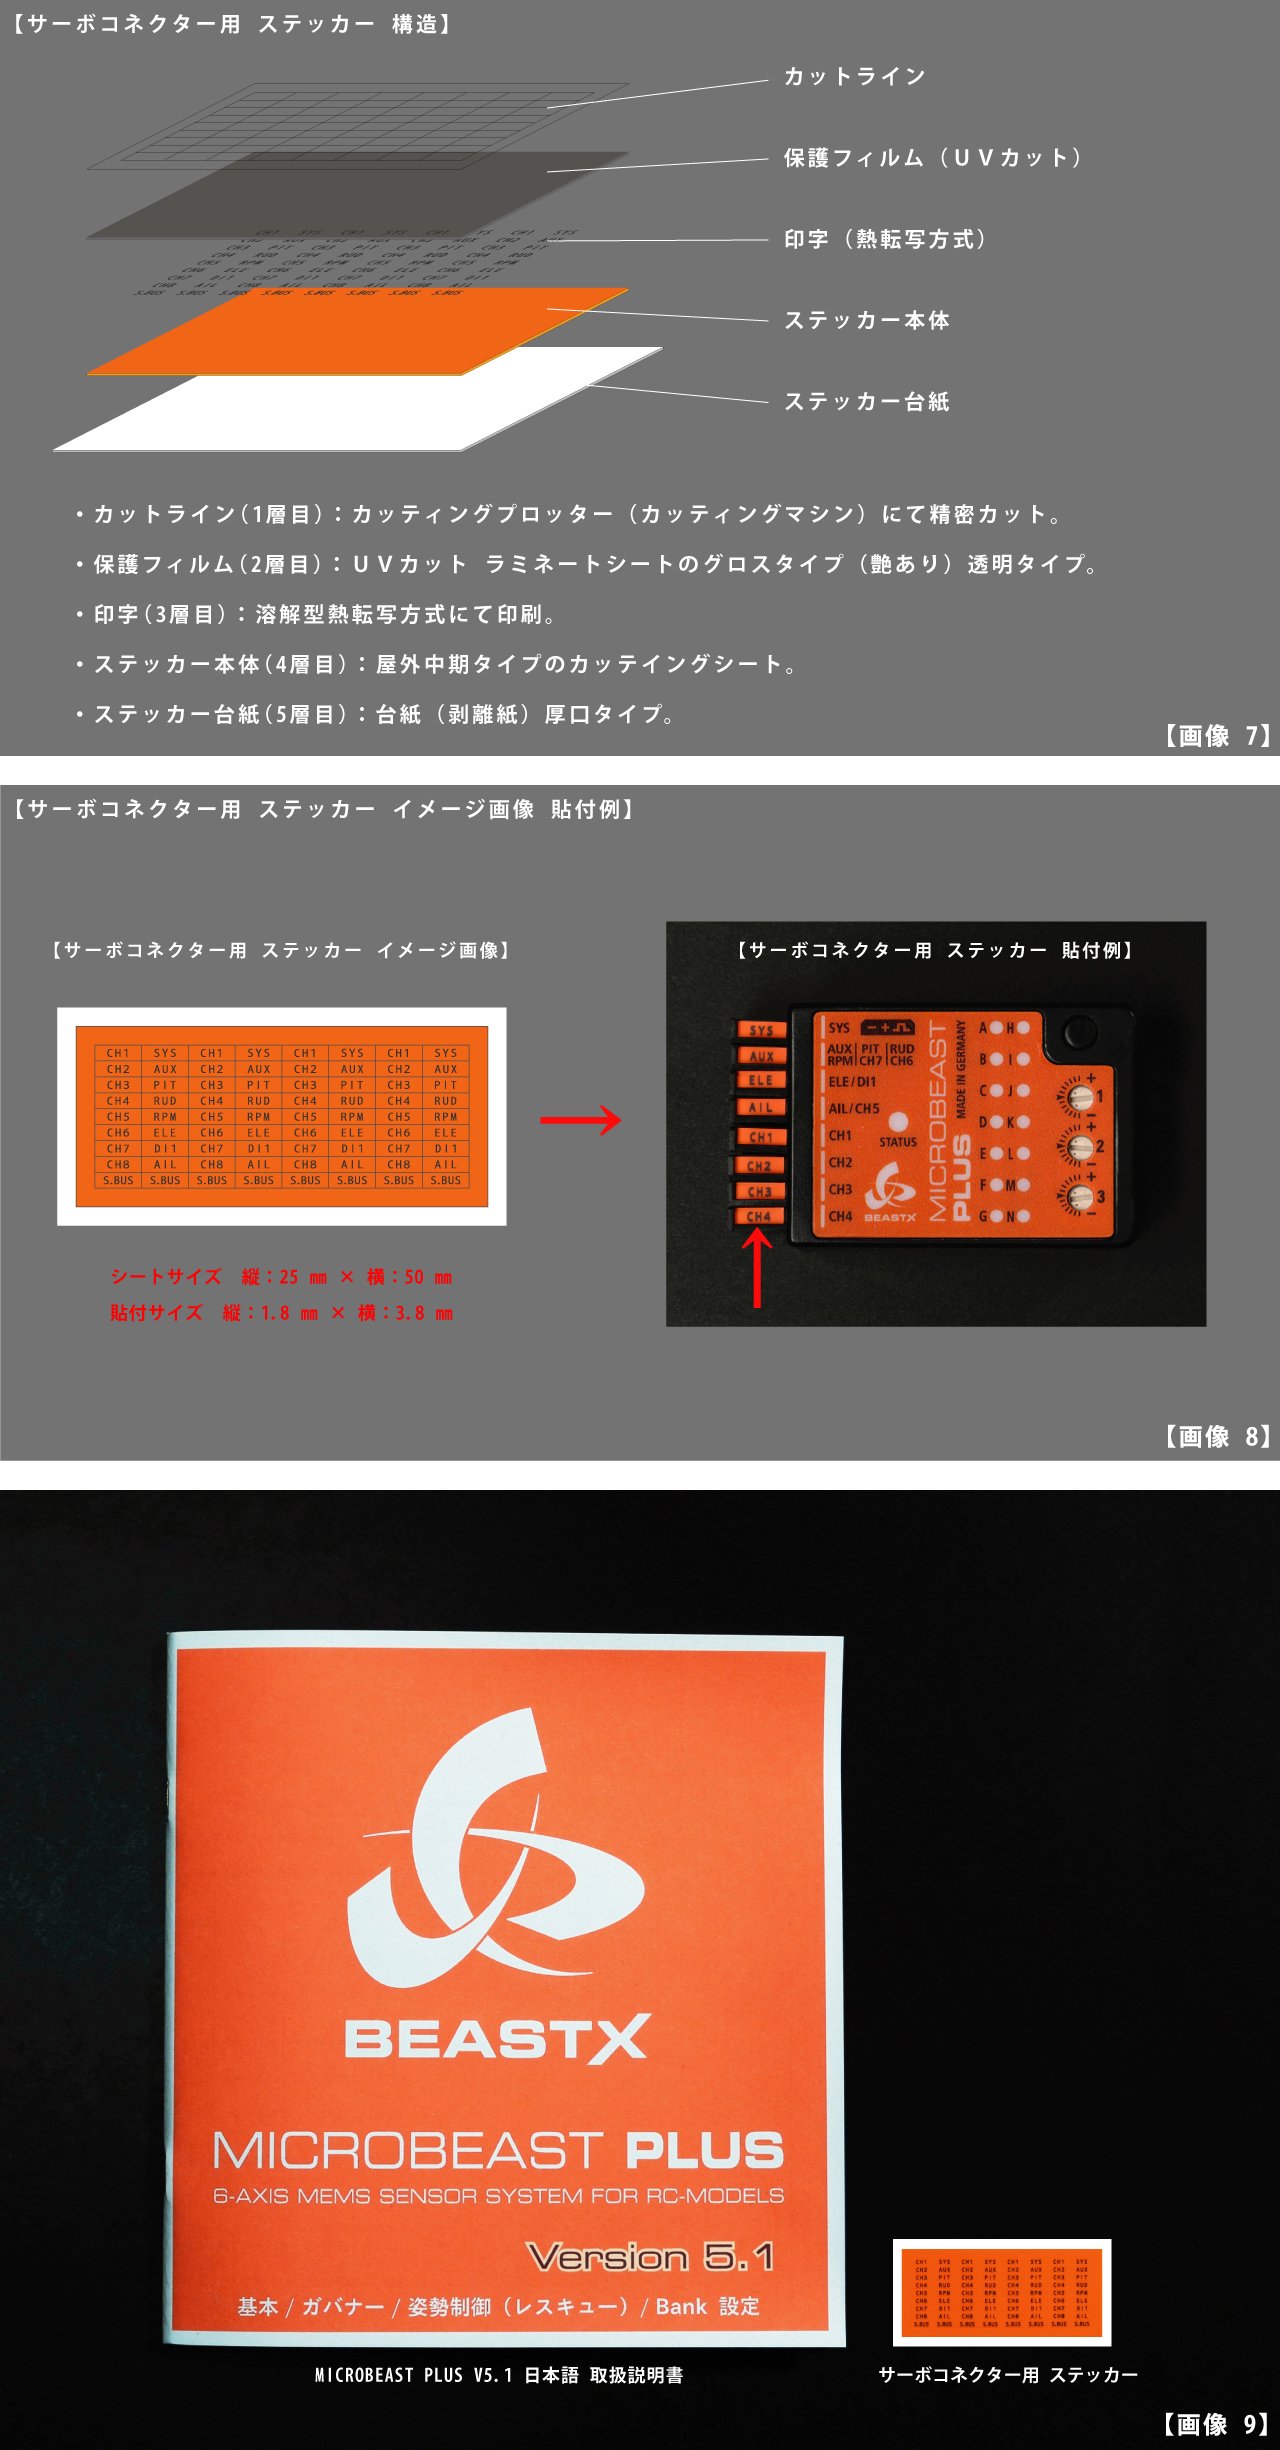 MICROBEAST PLUS V5.2 レスキュー機能付きプロエディション 日本語説明 ...